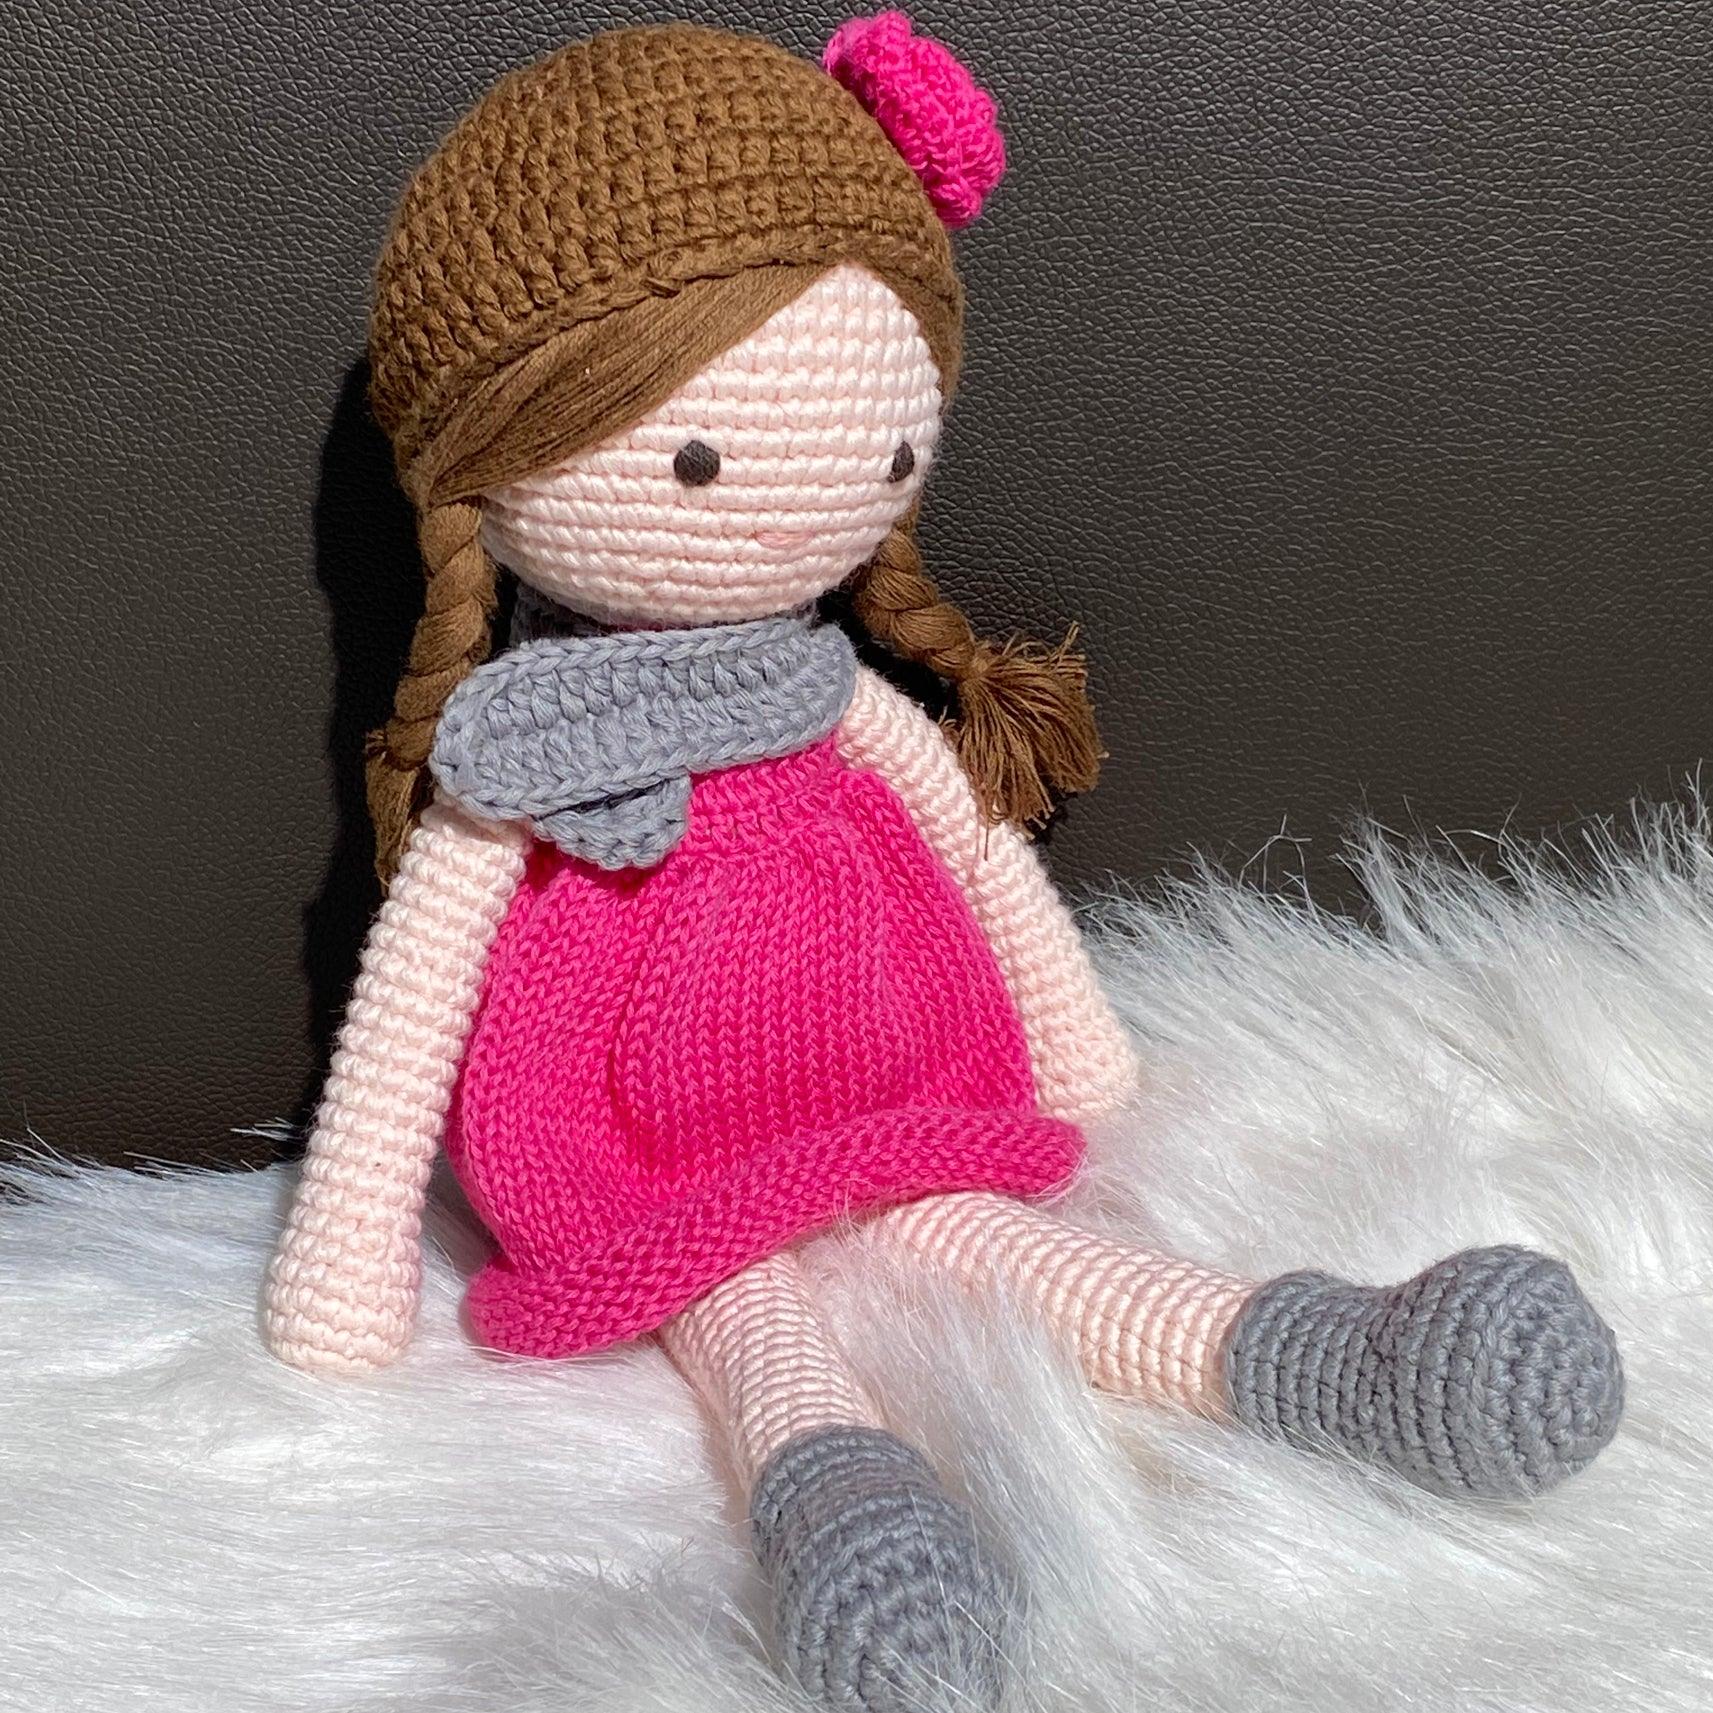 May's Hand Pink Dress Girl Crochet - Kids Haven